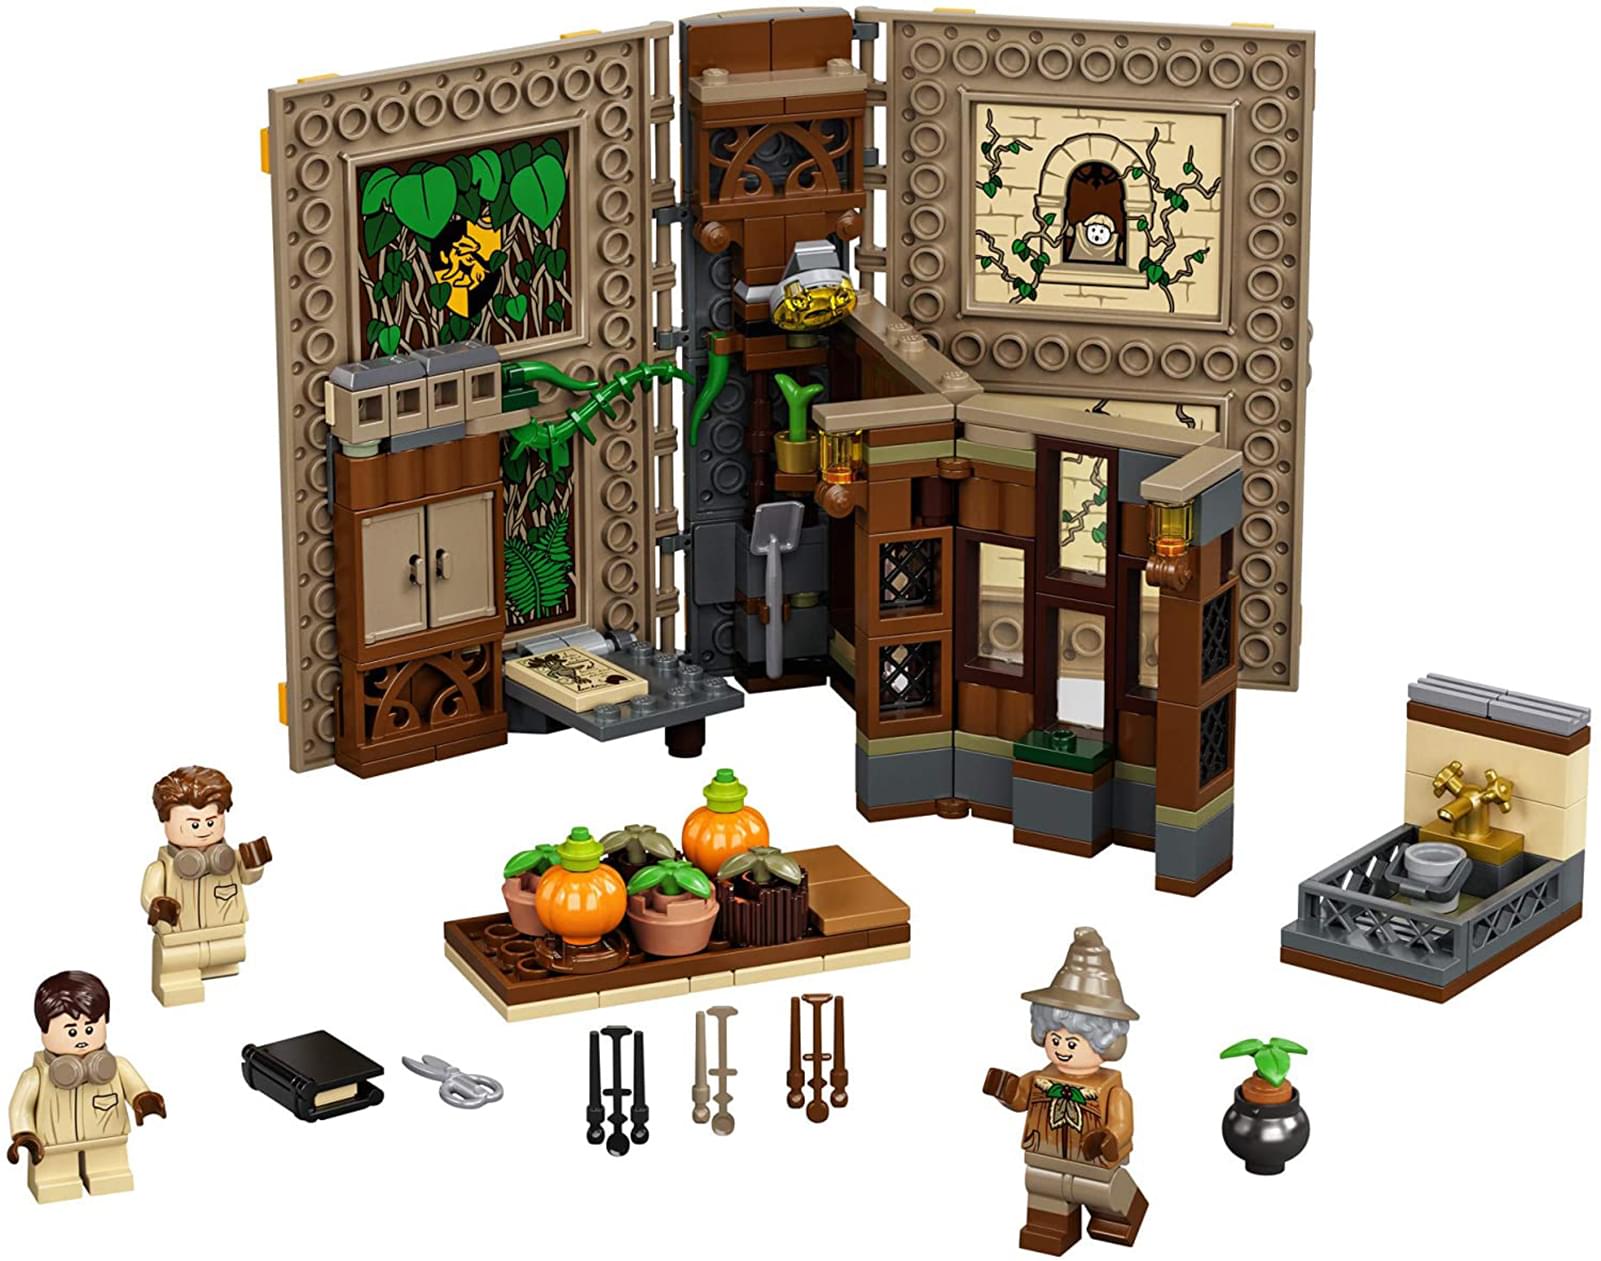 LEGO Harry Potter 76384 Hogwarts Moment: Herbology Class 233 Piece Building Kit